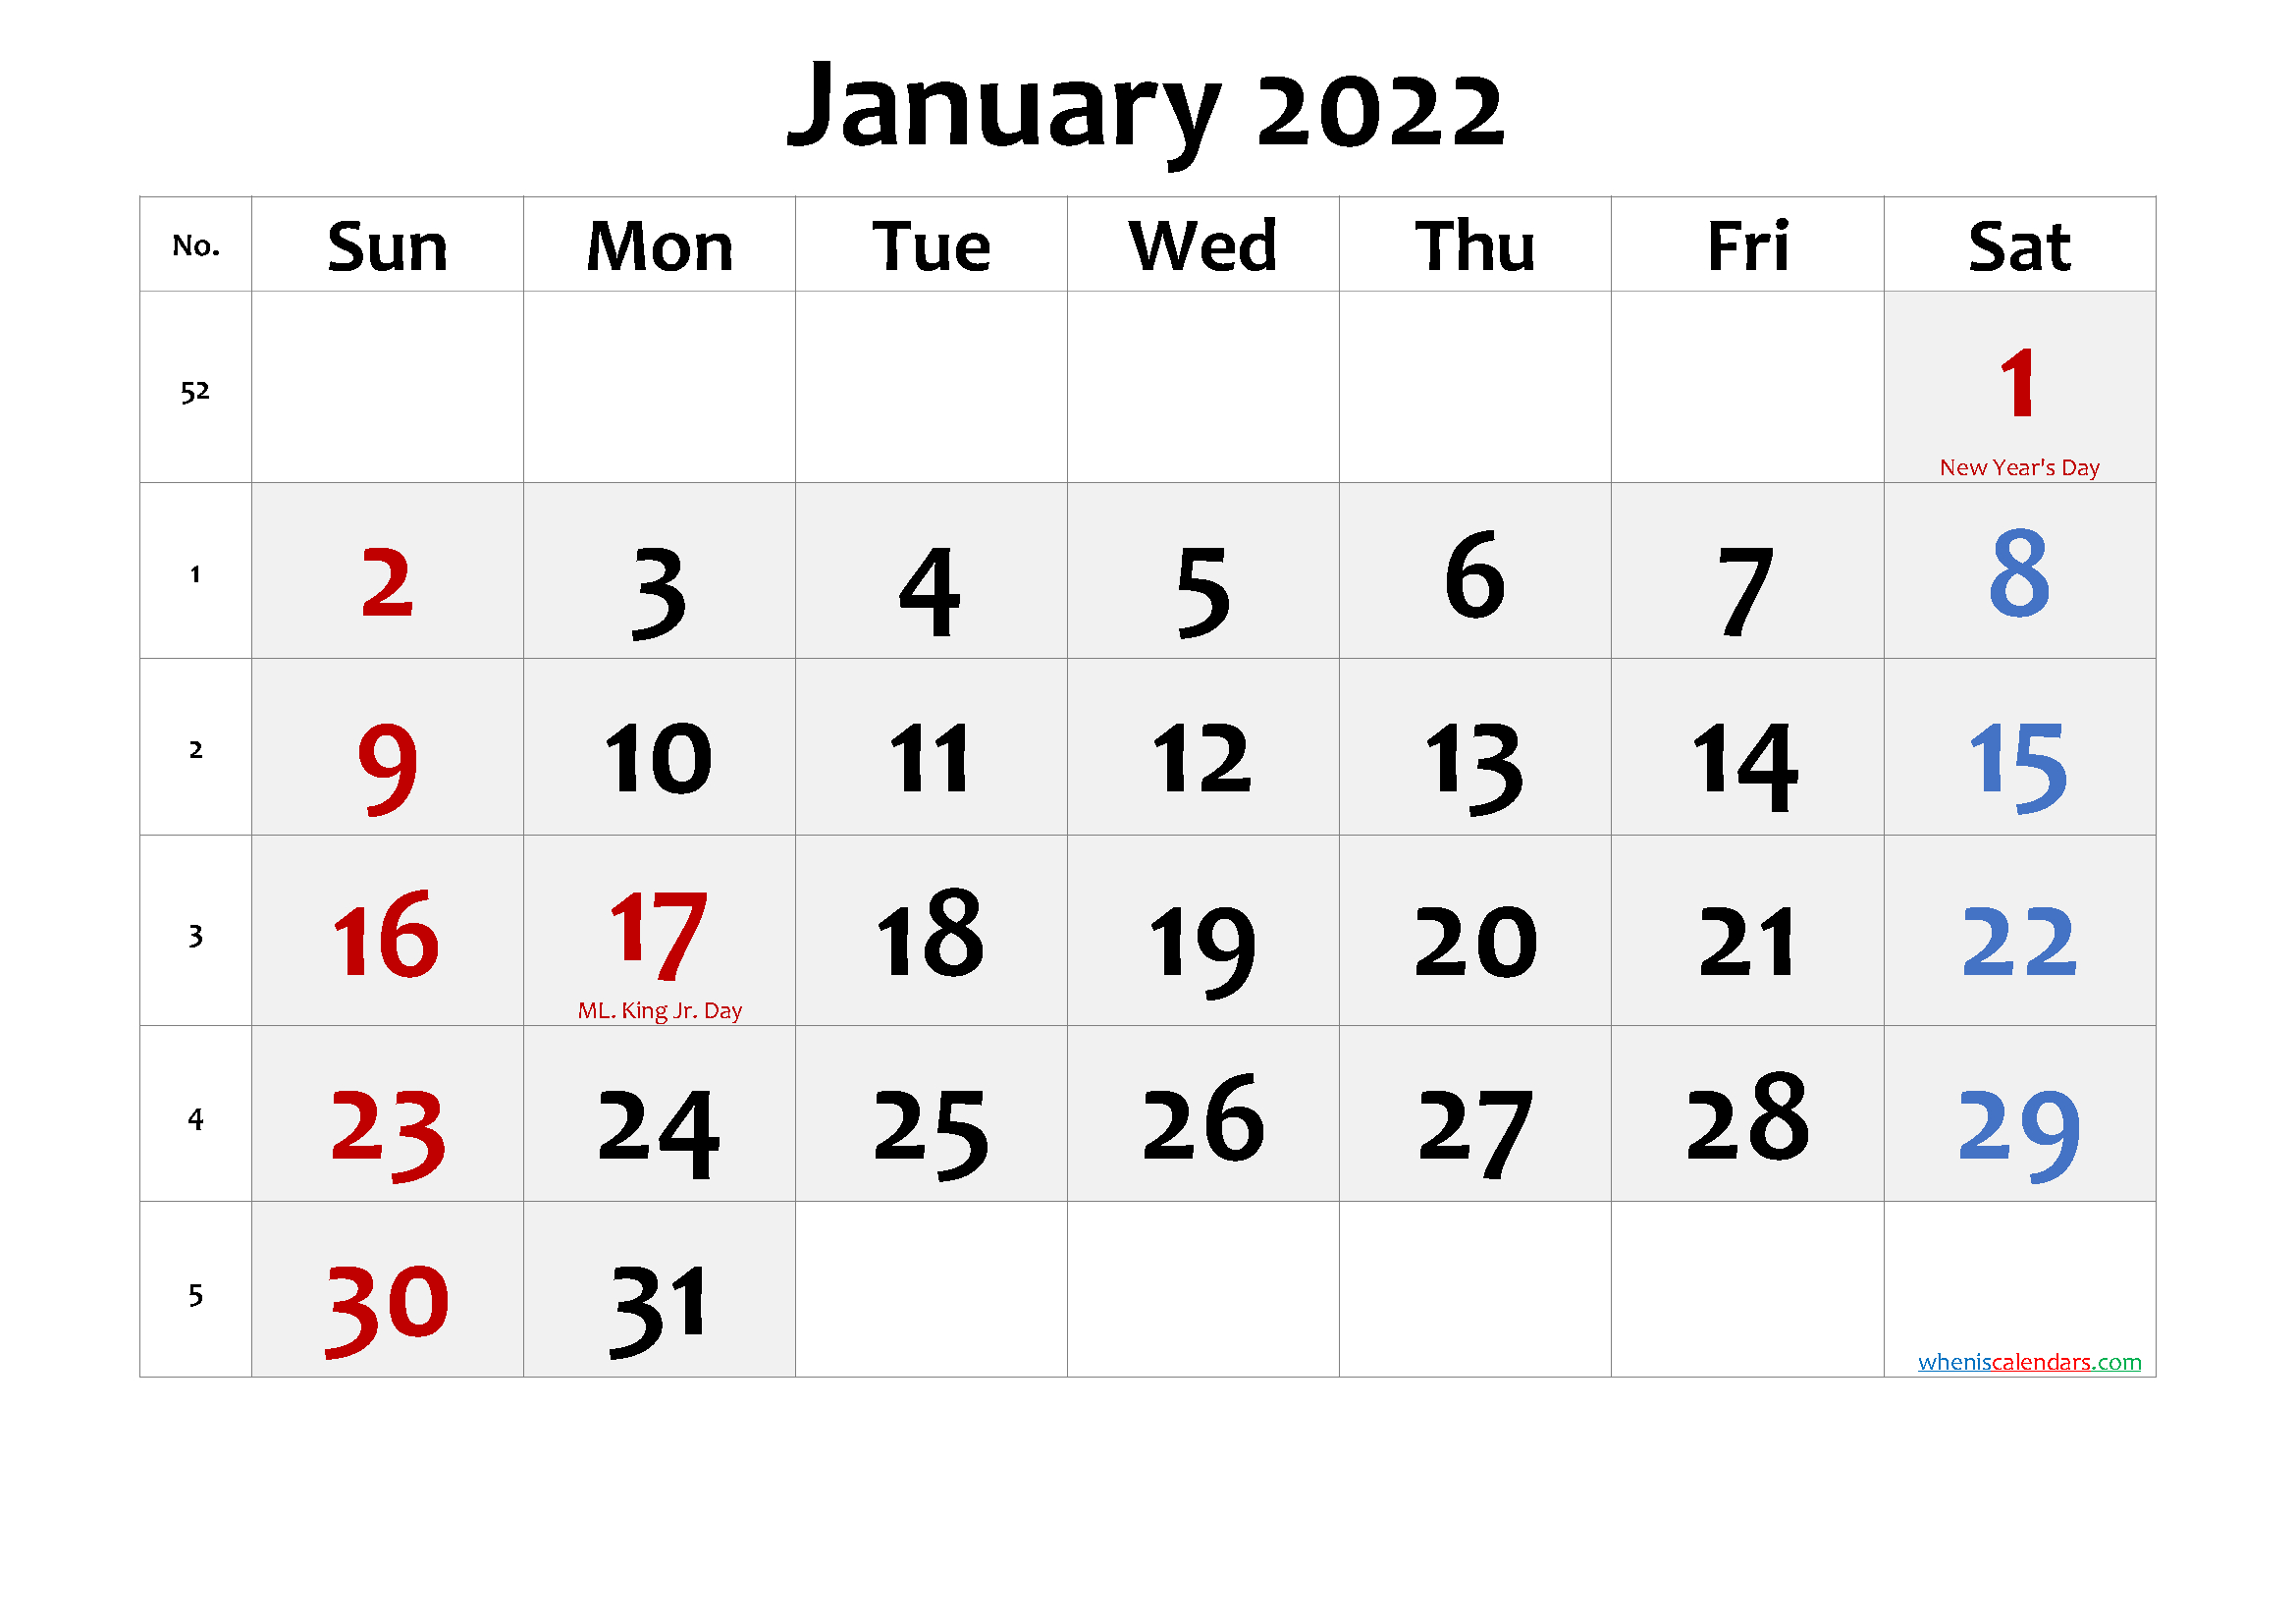 January 2022 Calendar Holidays - January Calendar 2022